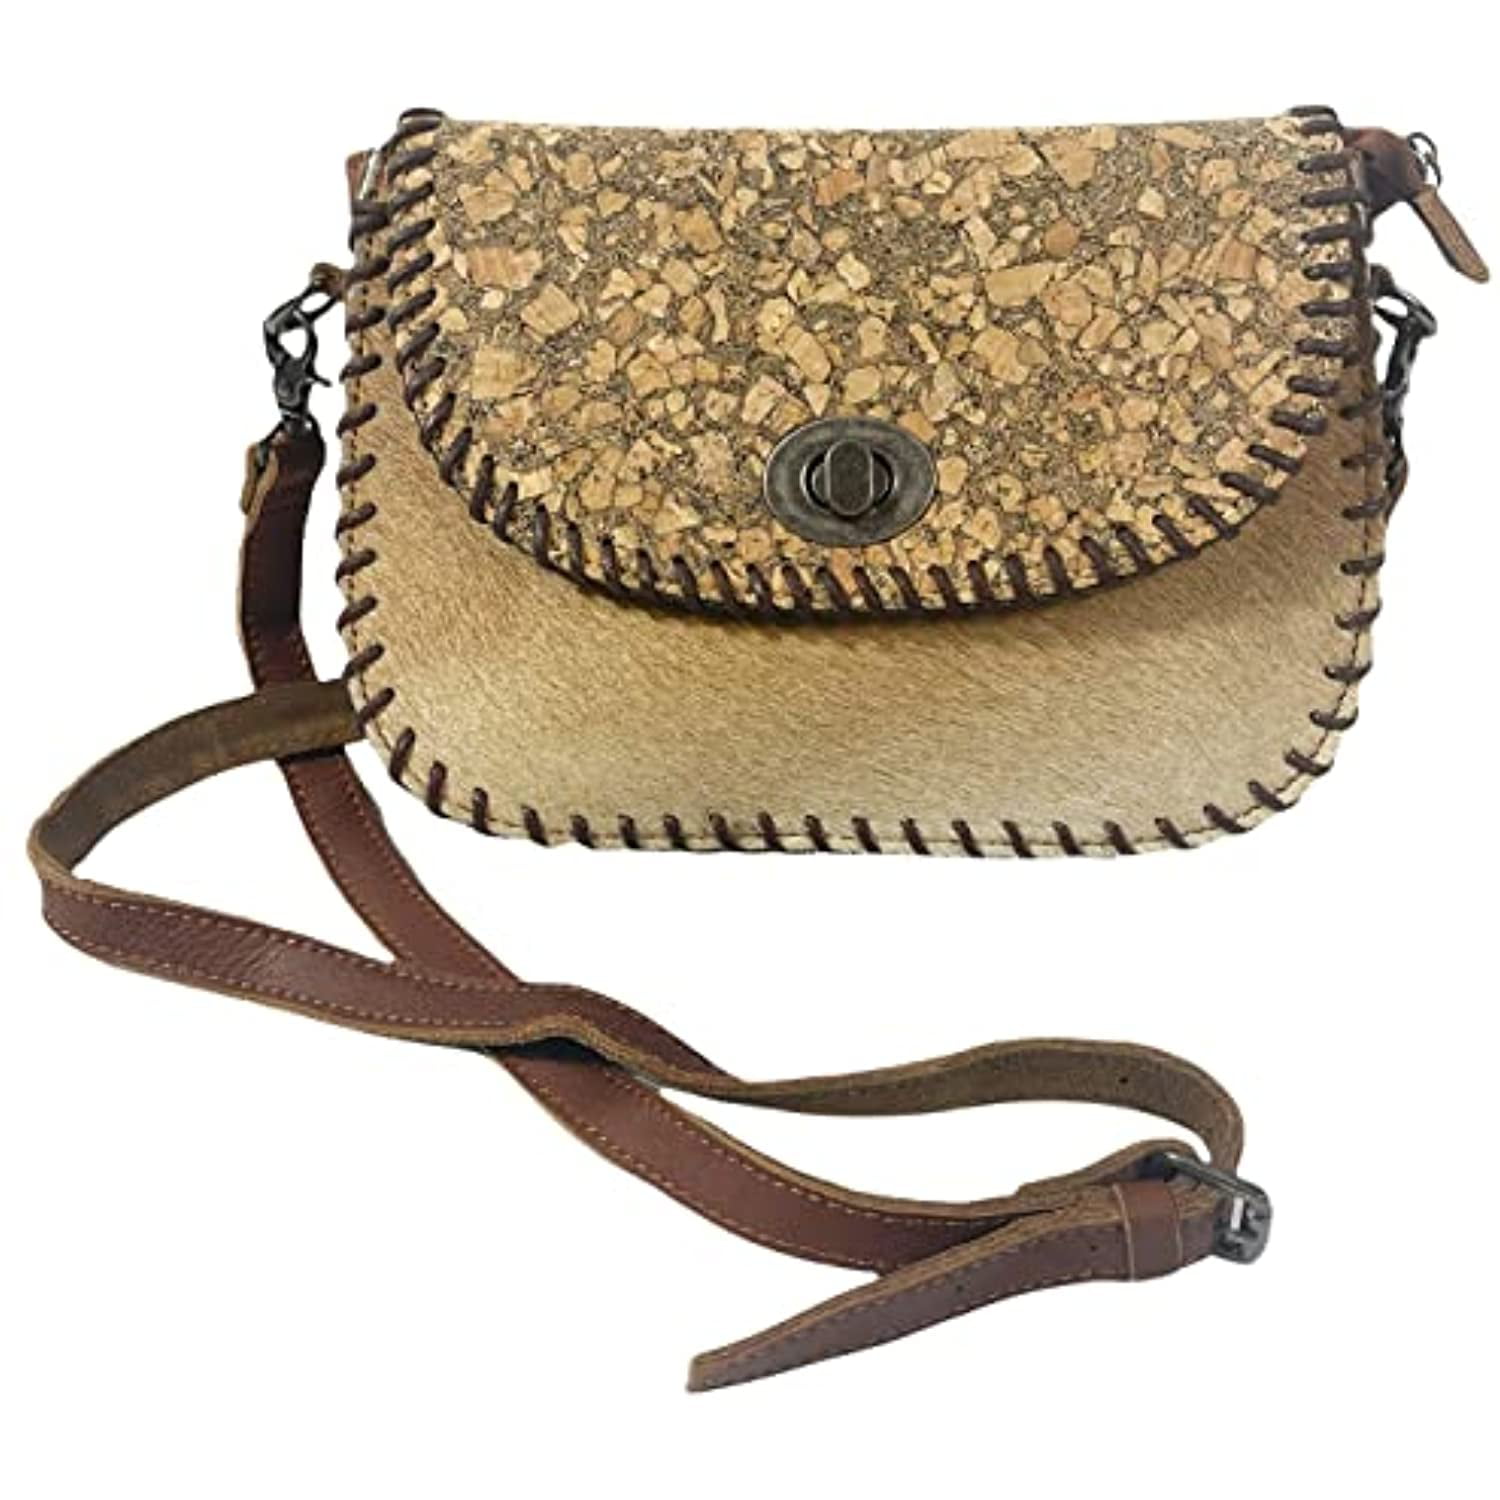 Urbalabs Western Crossbody Purse Genuine CowHair Cork Flap Leather Handbag Tote Bag Women Zipper Hand Stitched Brown 0e130808 3f9e 4ec2 a55a 677fb2c5ec77.8a8b4f45931ebcb4e8937f05c6e74486